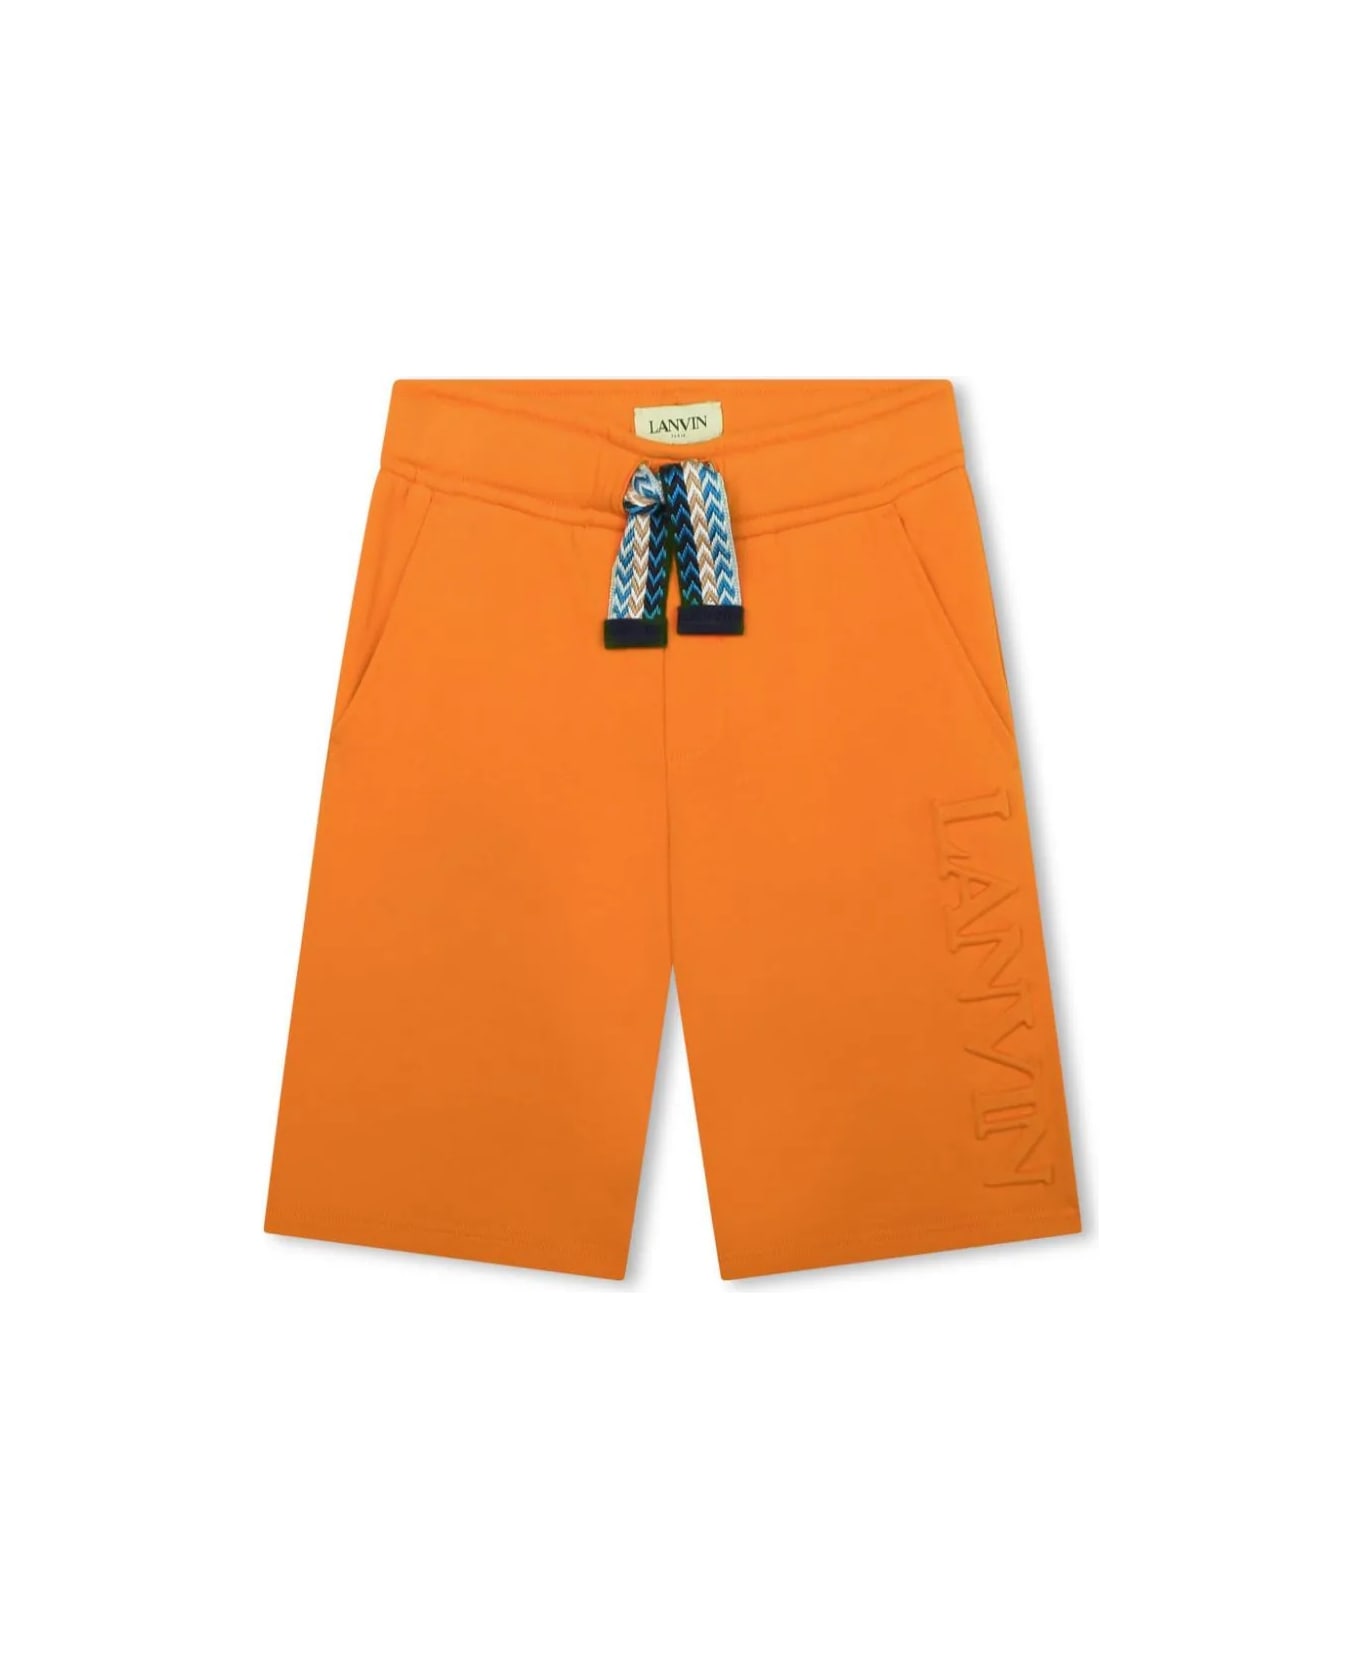 Lanvin Orange Shorts With Logo And "curb" Motif - Orange